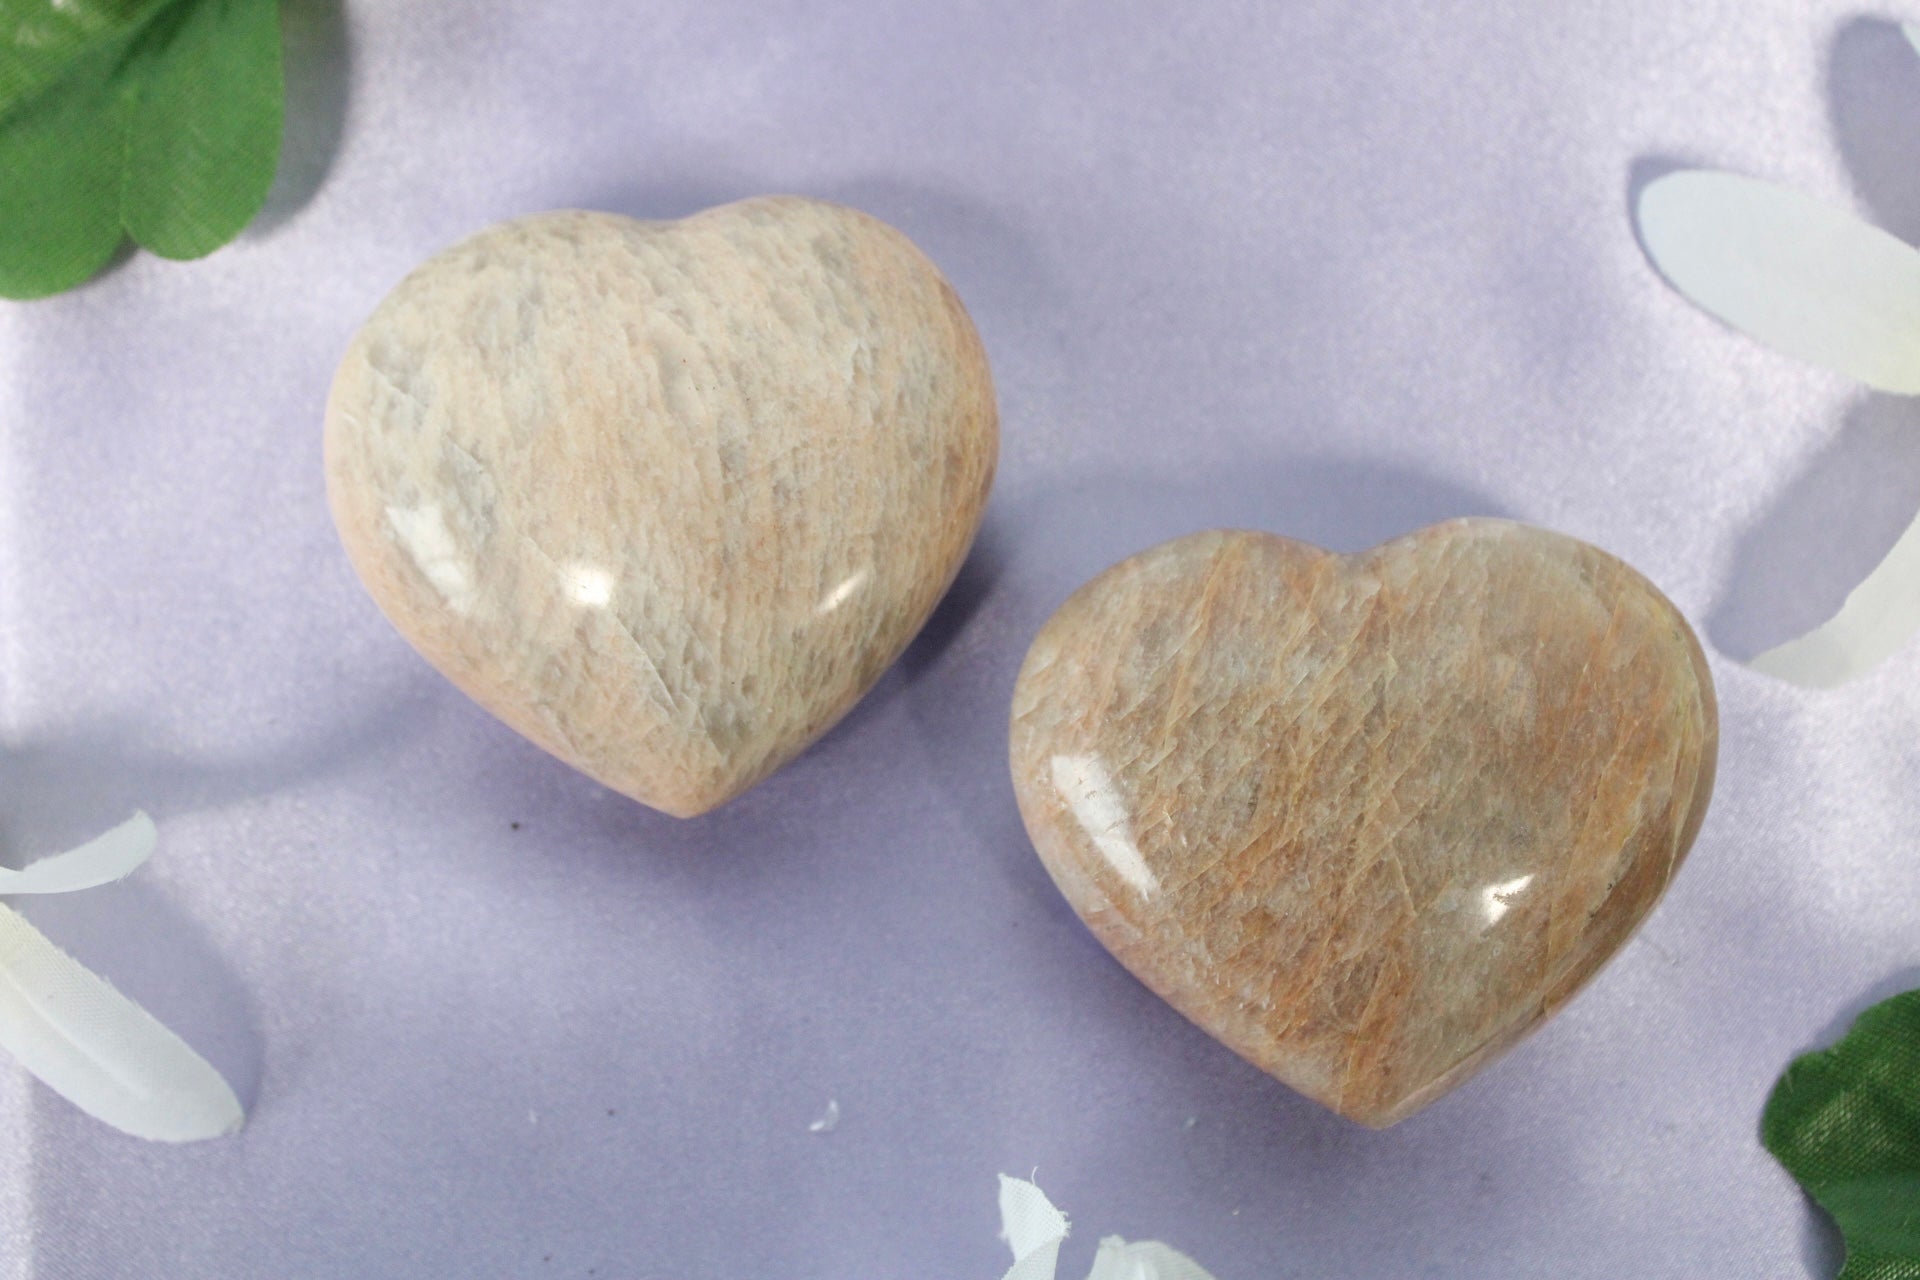 Peach Moonstone Crystal Heart